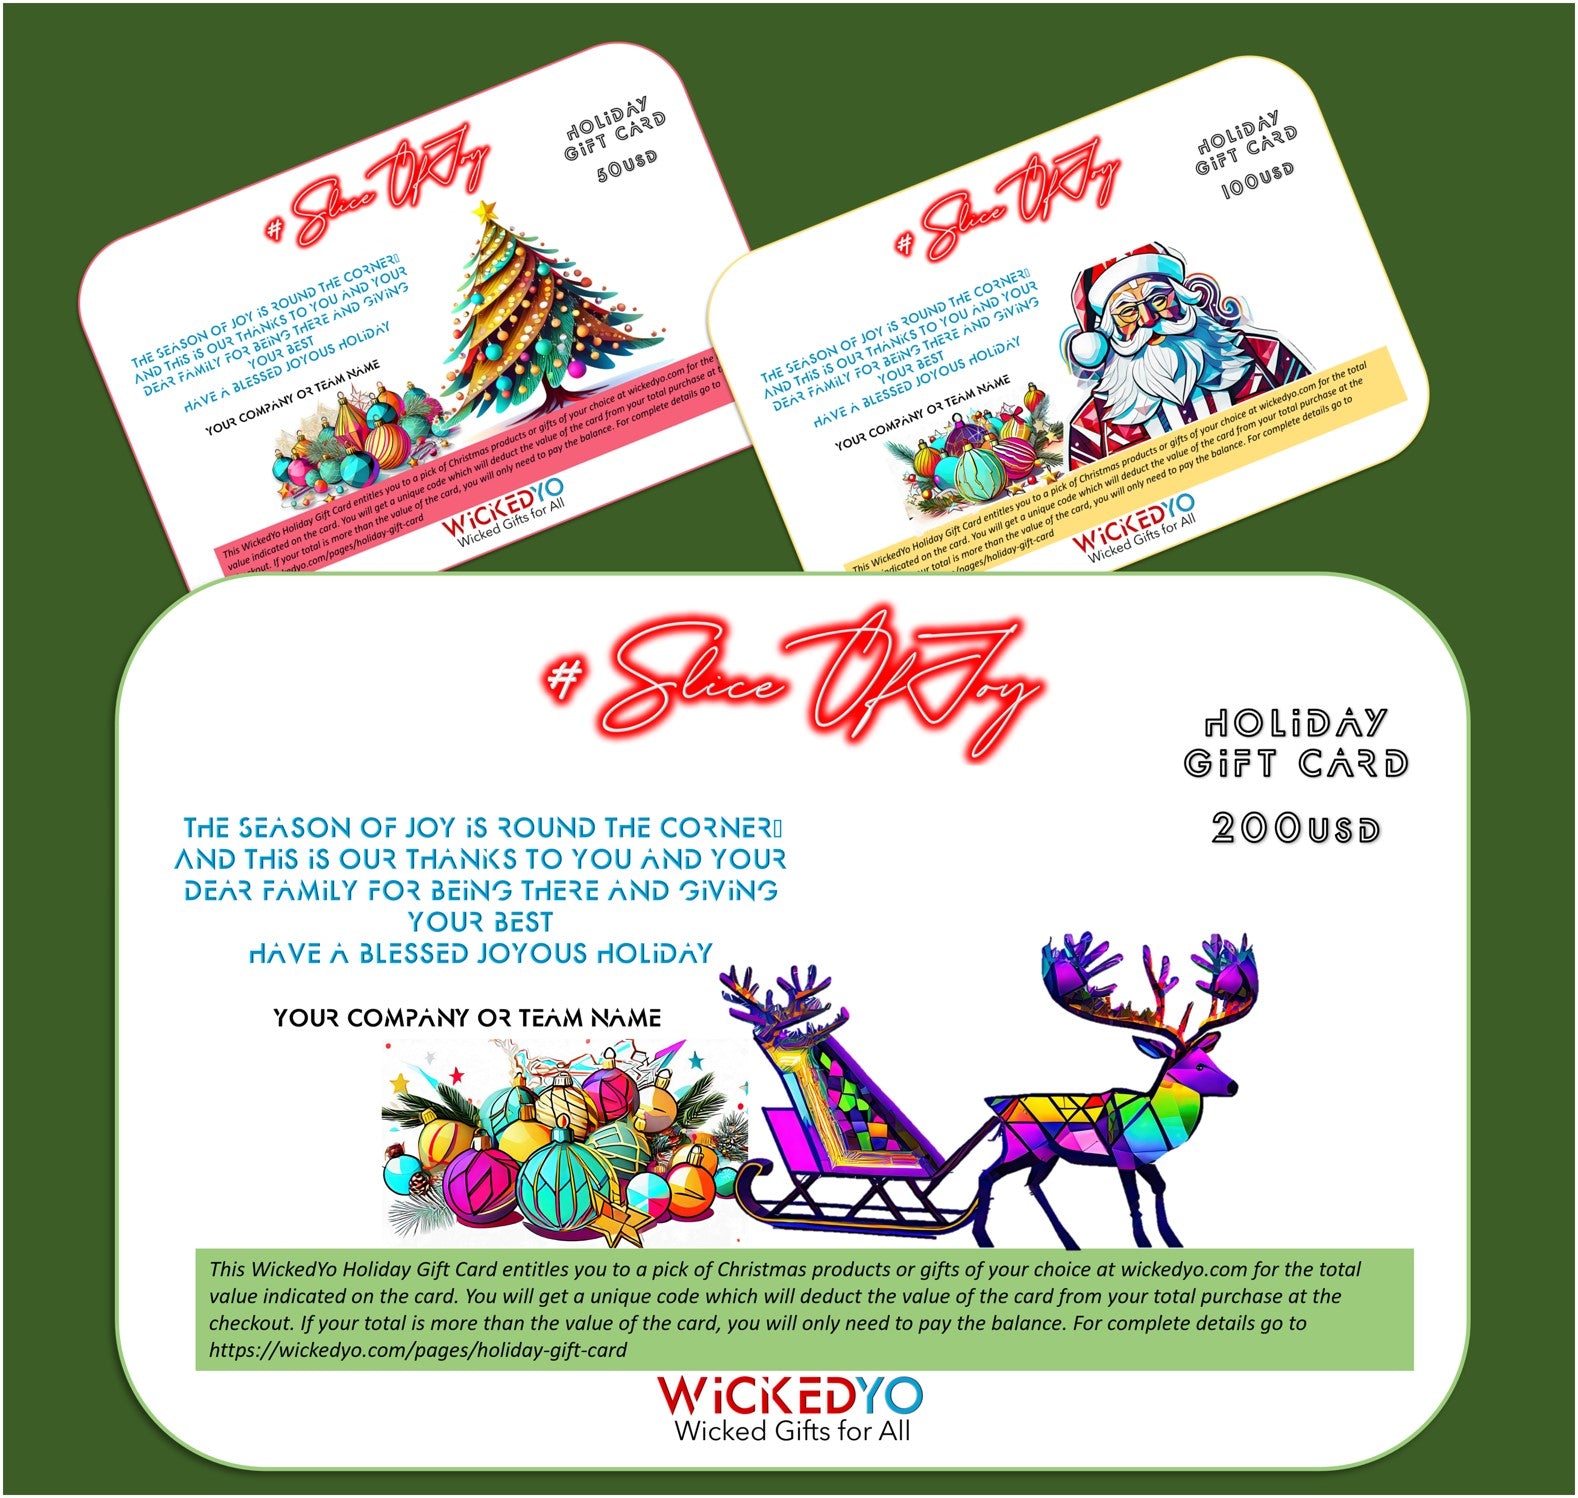 wickedyo-holiday-gift-card-slice-of-joy-christmas-gift-card-range3